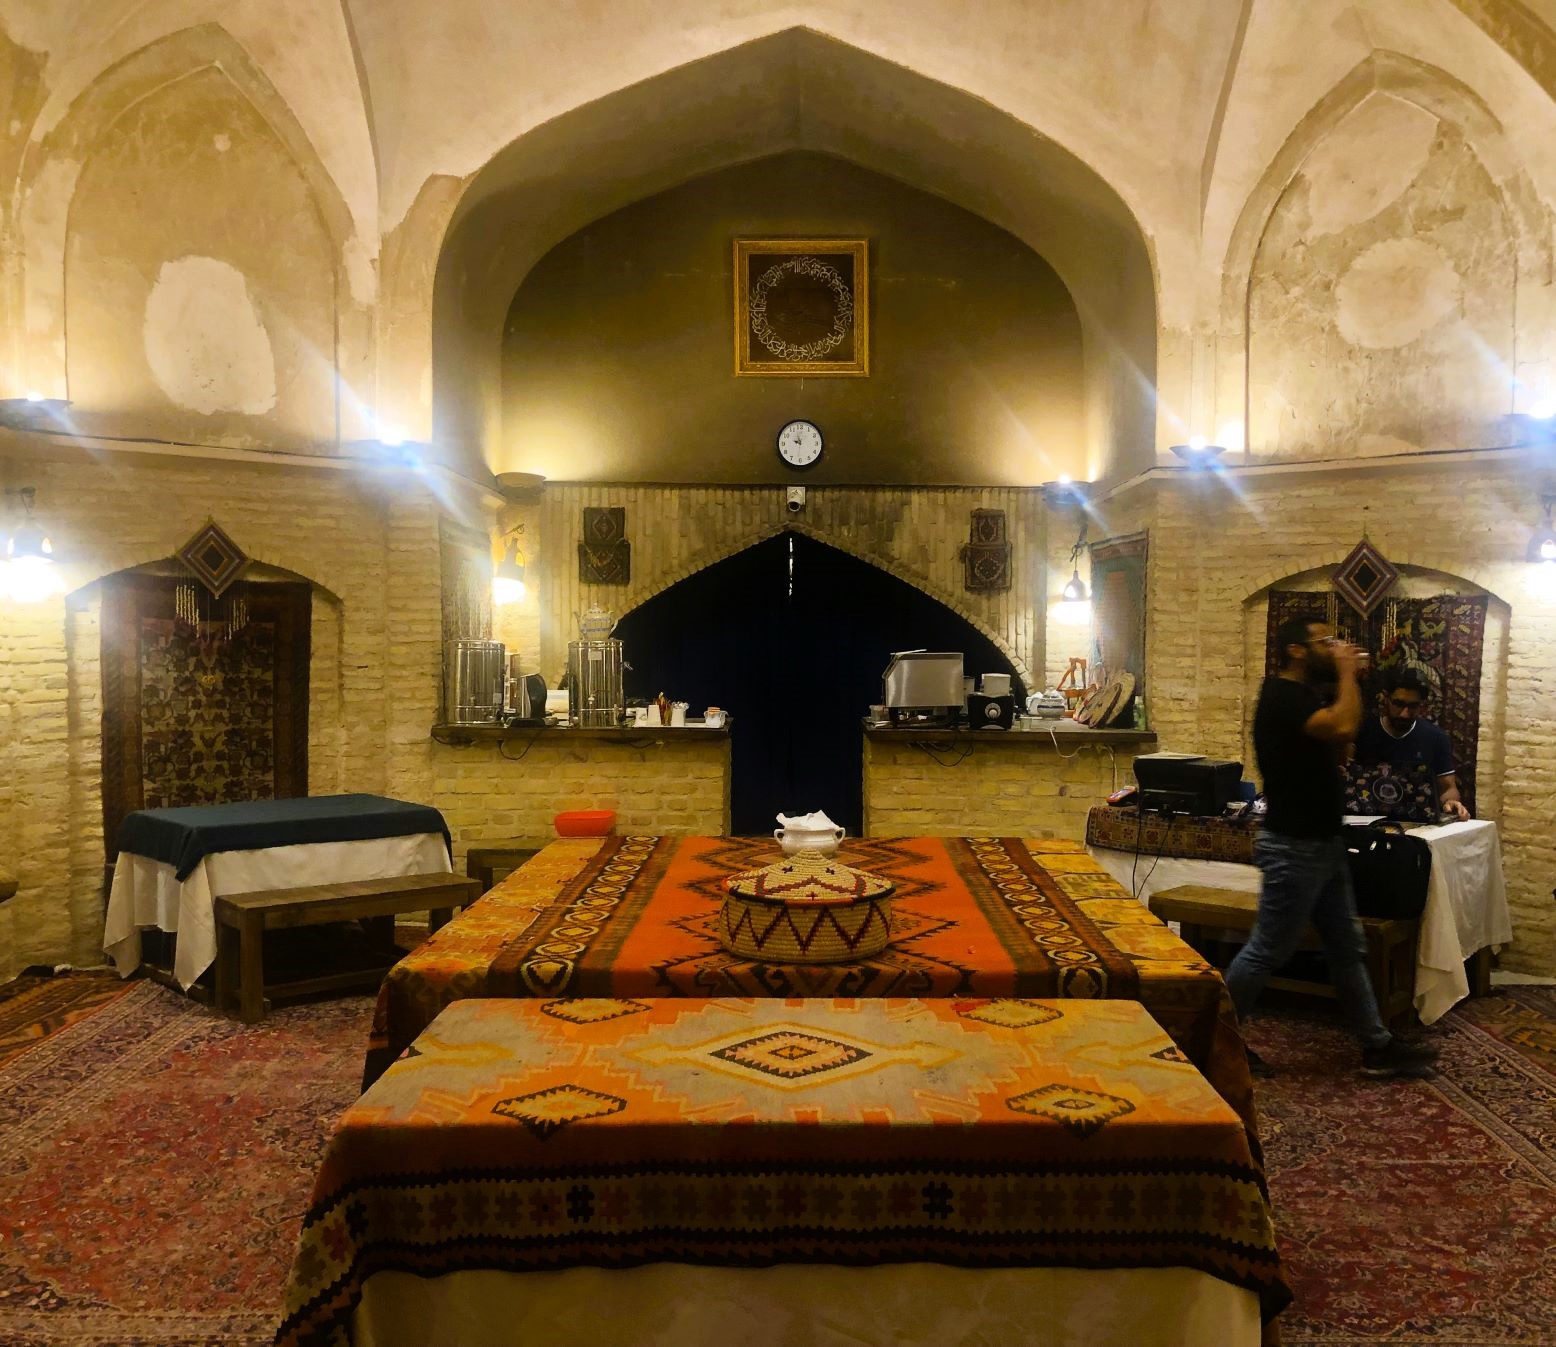 Zein-o-Din Caravanserai, Rafsanjan, Iran